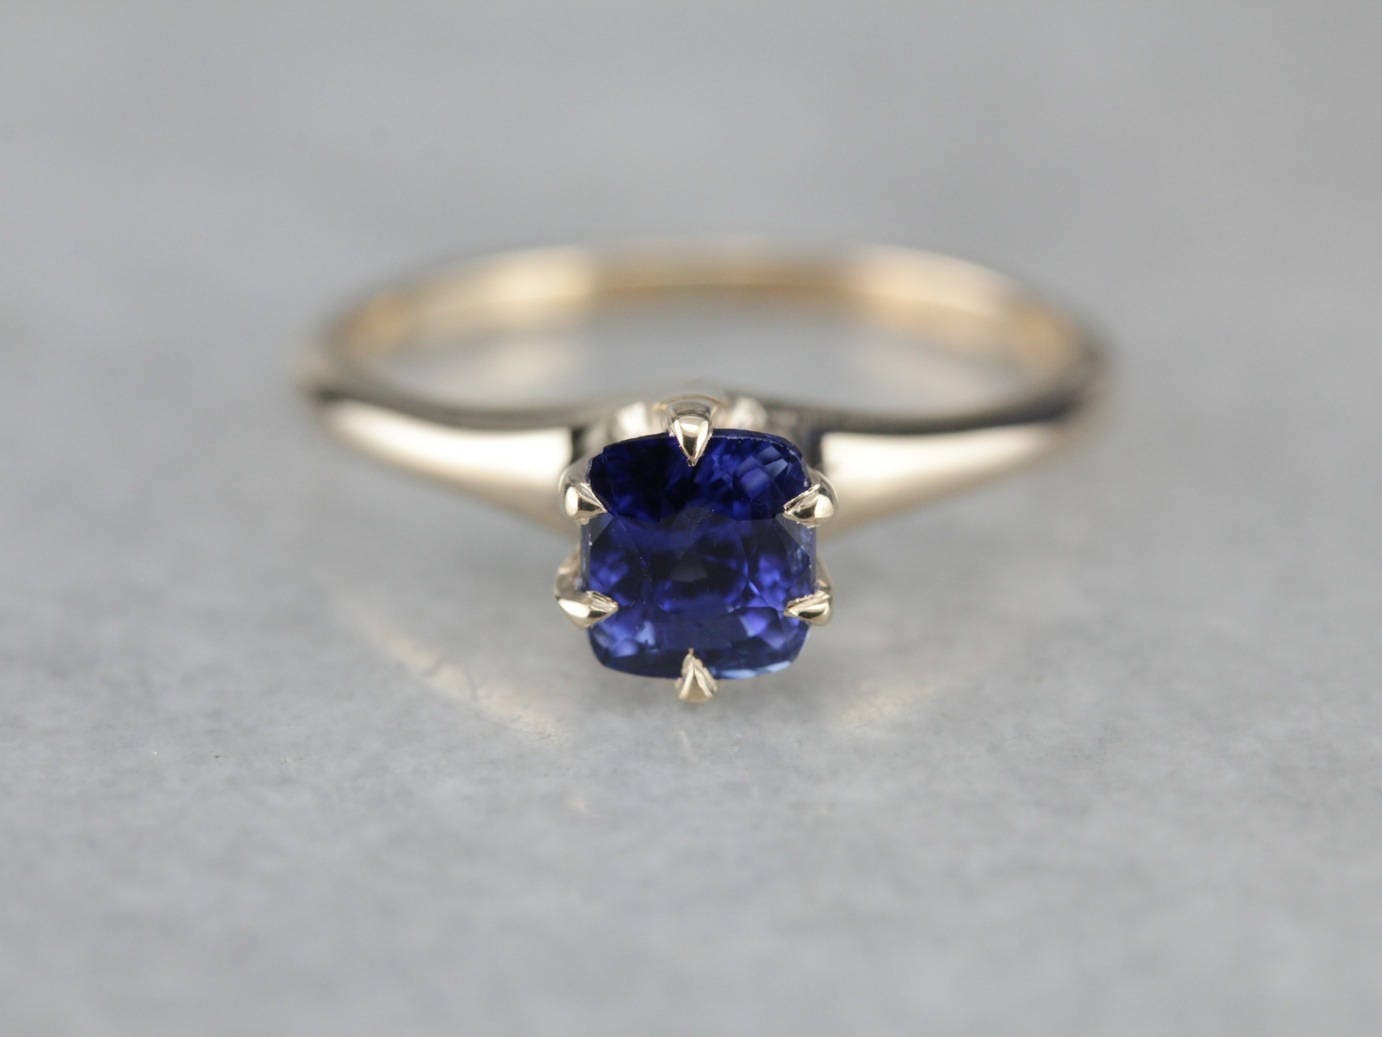 Gorgeous Royal Blue Sapphire Solitaire Ring Antique | Etsy